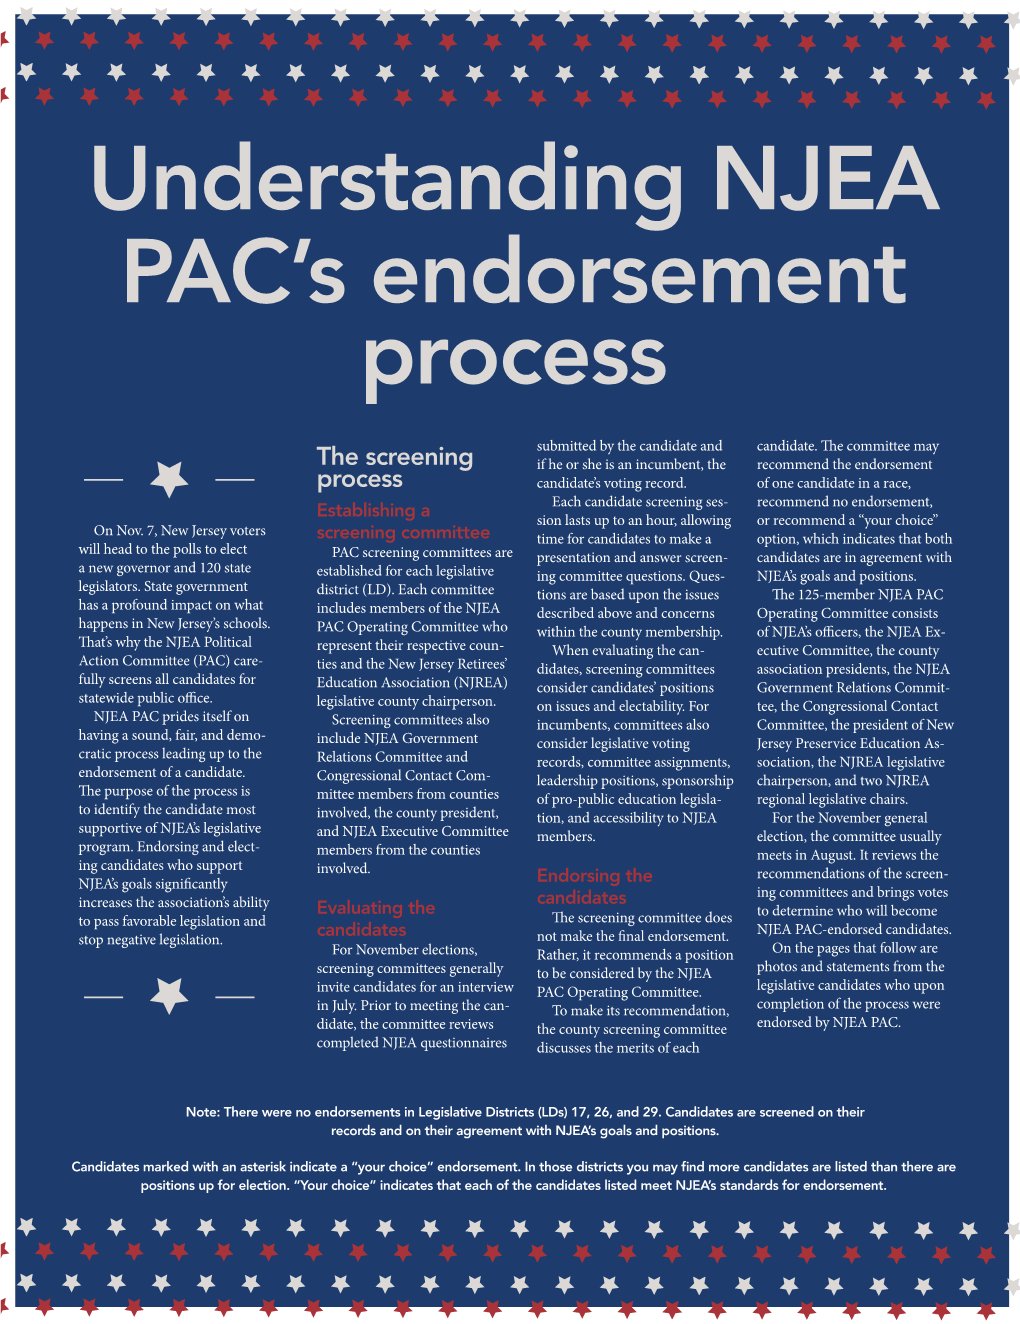 Understanding NJEA PAC's Endorsement Process